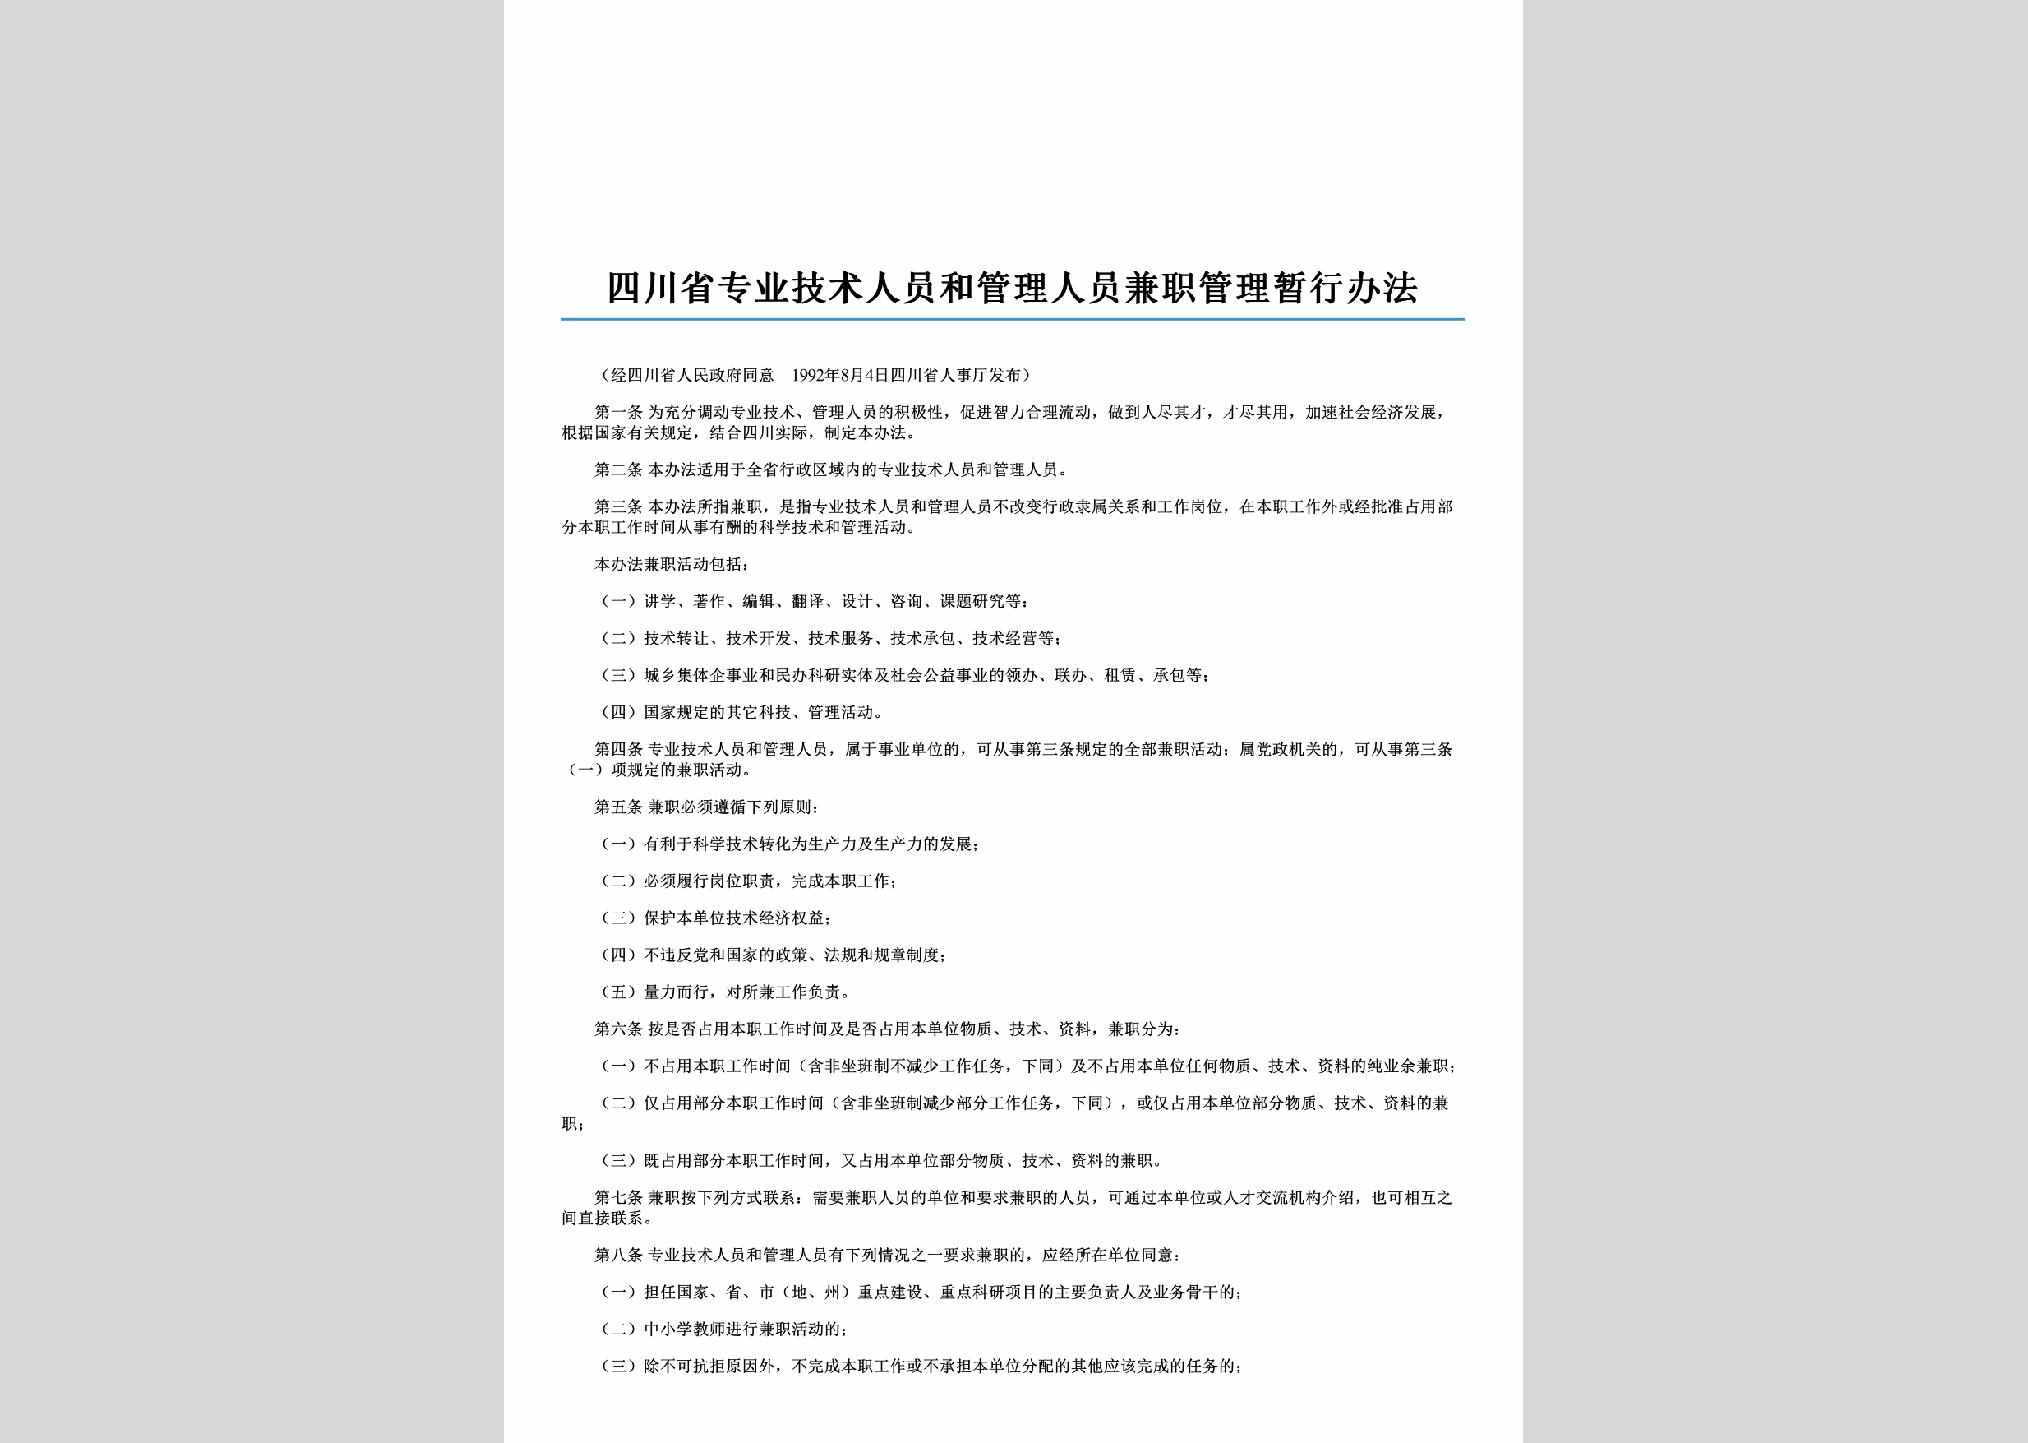 SC-JZGLZXBF-2006：四川省专业技术人员和管理人员兼职管理暂行办法